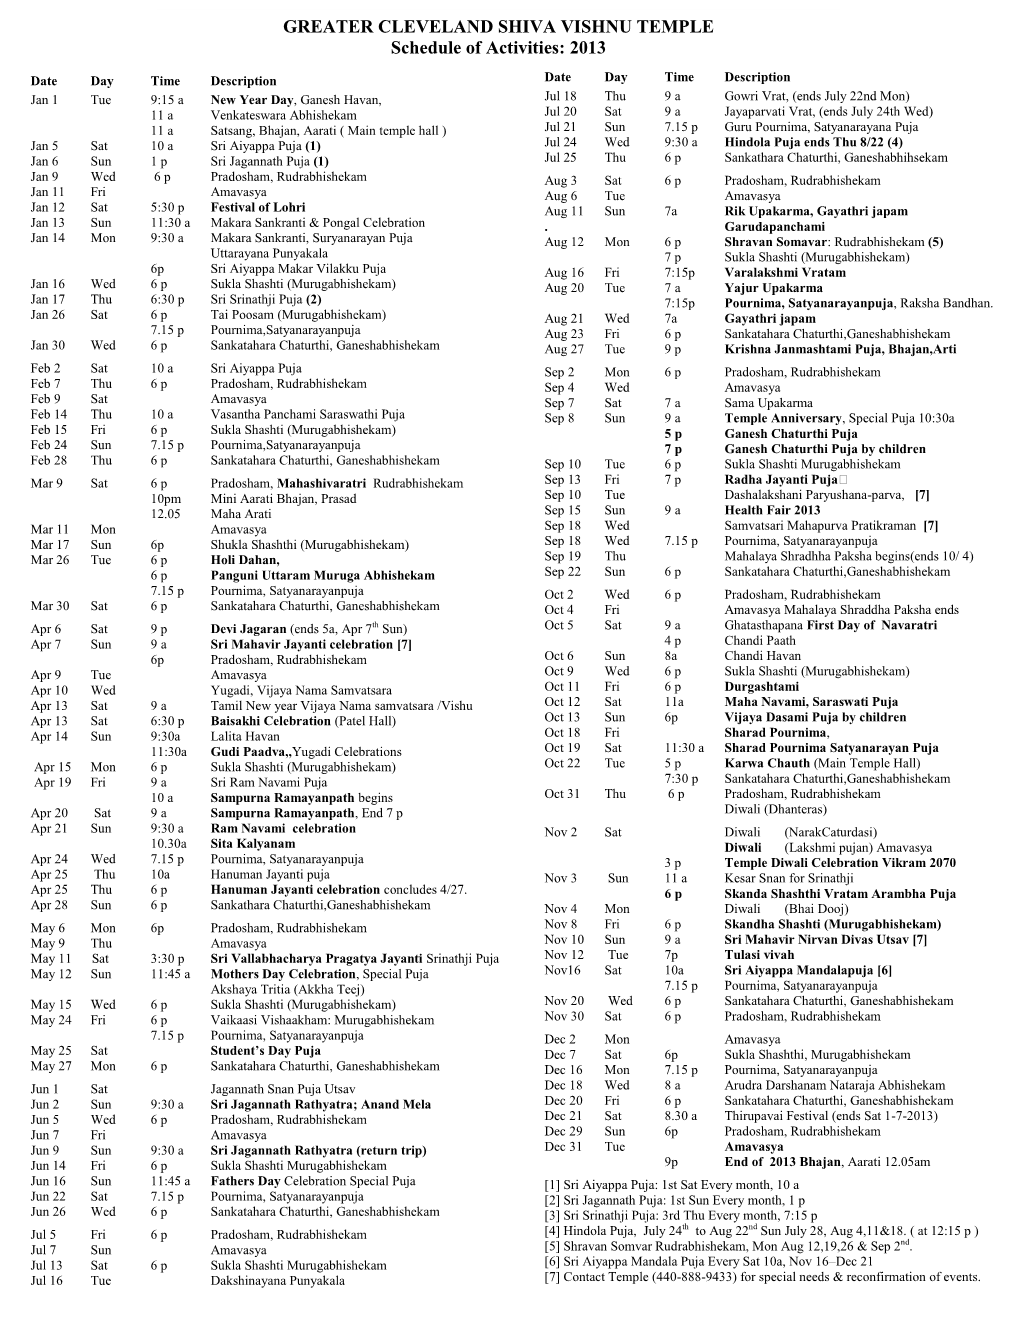 GREATER CLEVELAND SHIVA VISHNU TEMPLE Schedule of Activities: 2013